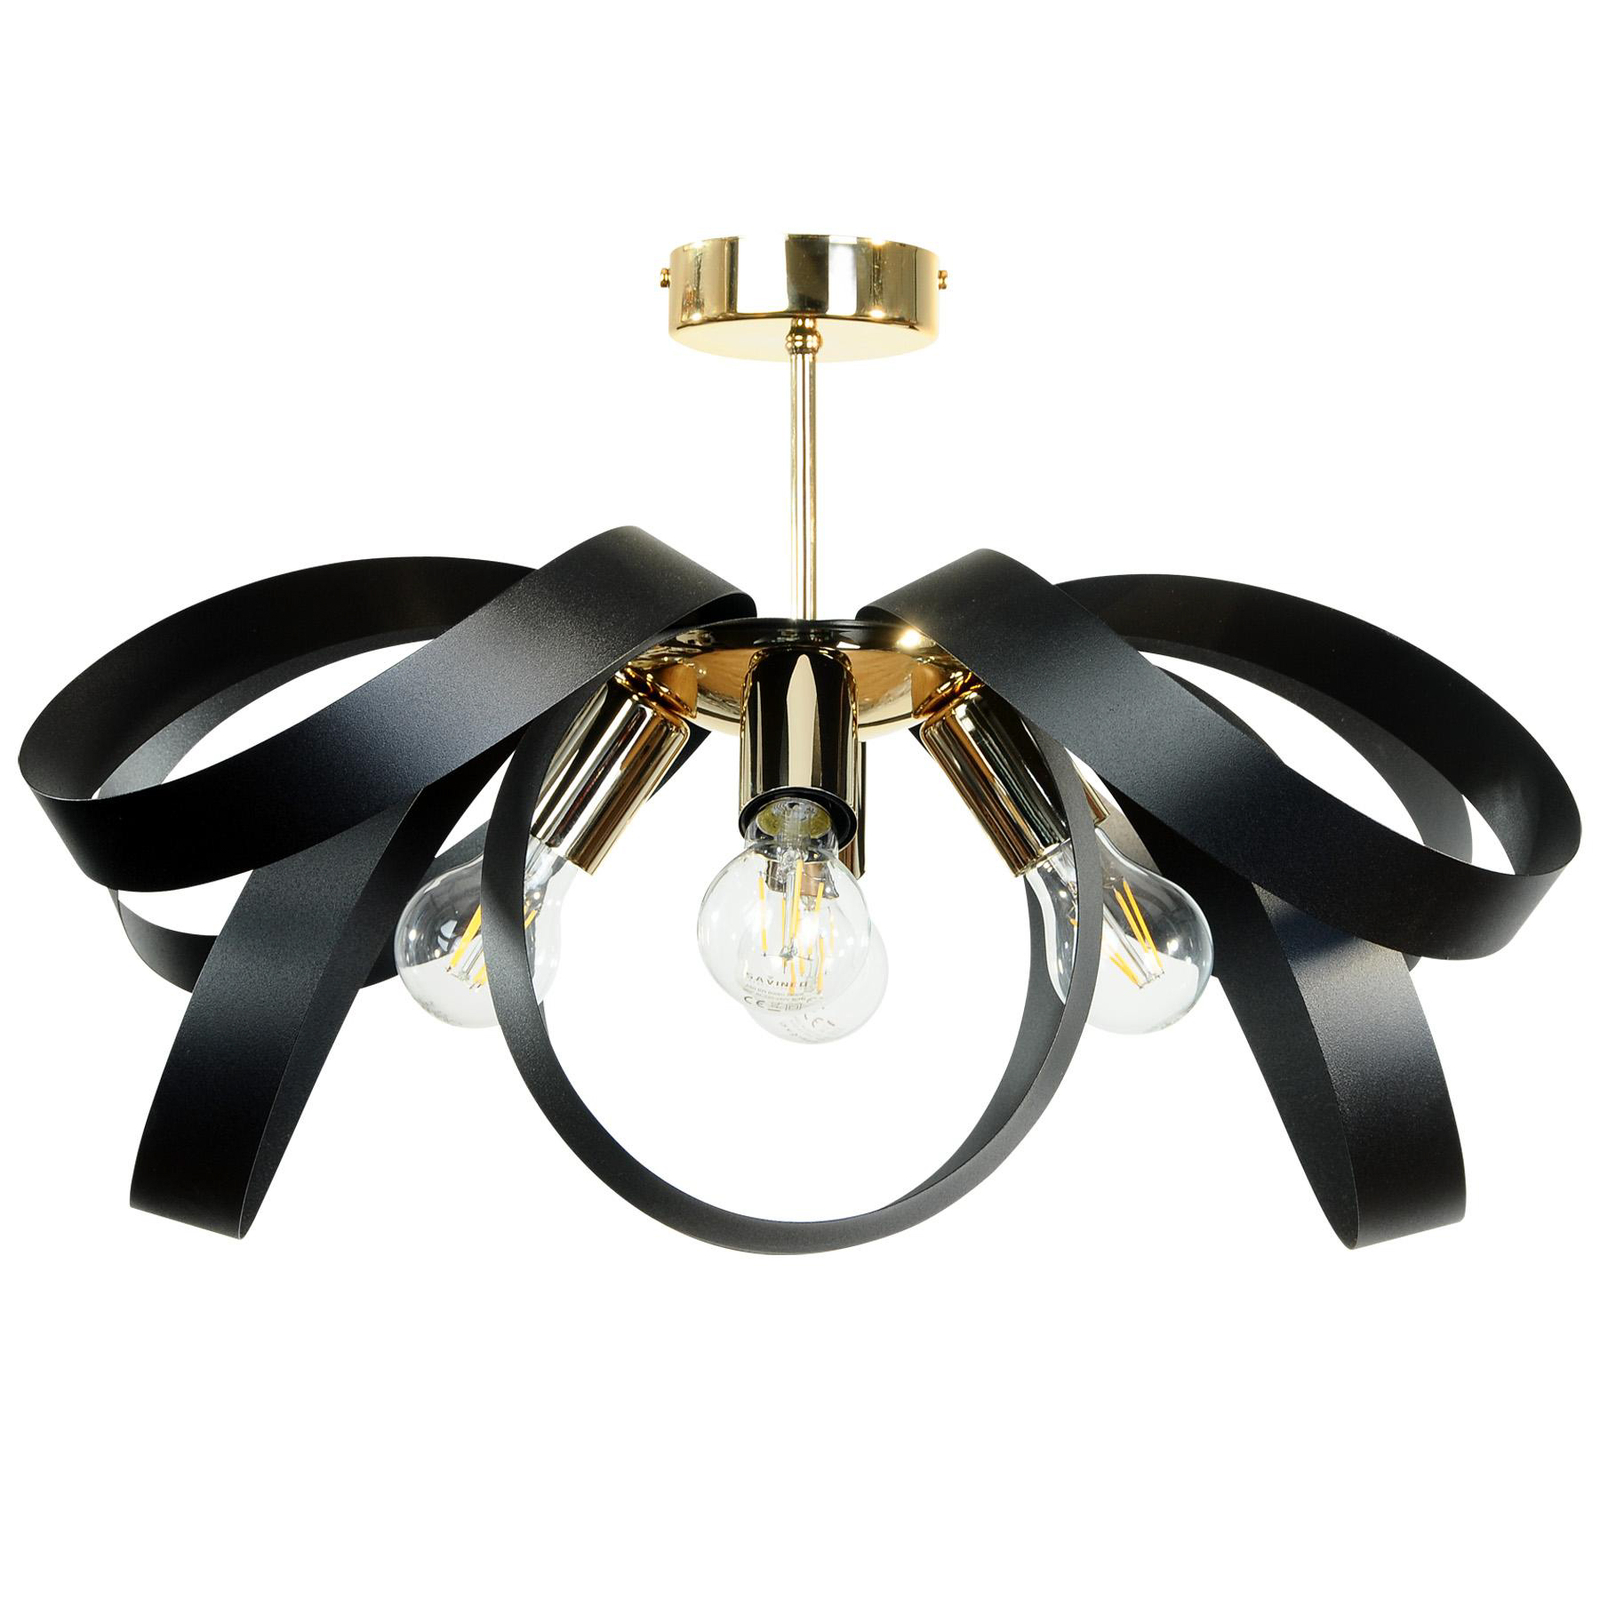 Euluna Petla plafondlamp, zwart/goud, metaal, Ø 65 cm